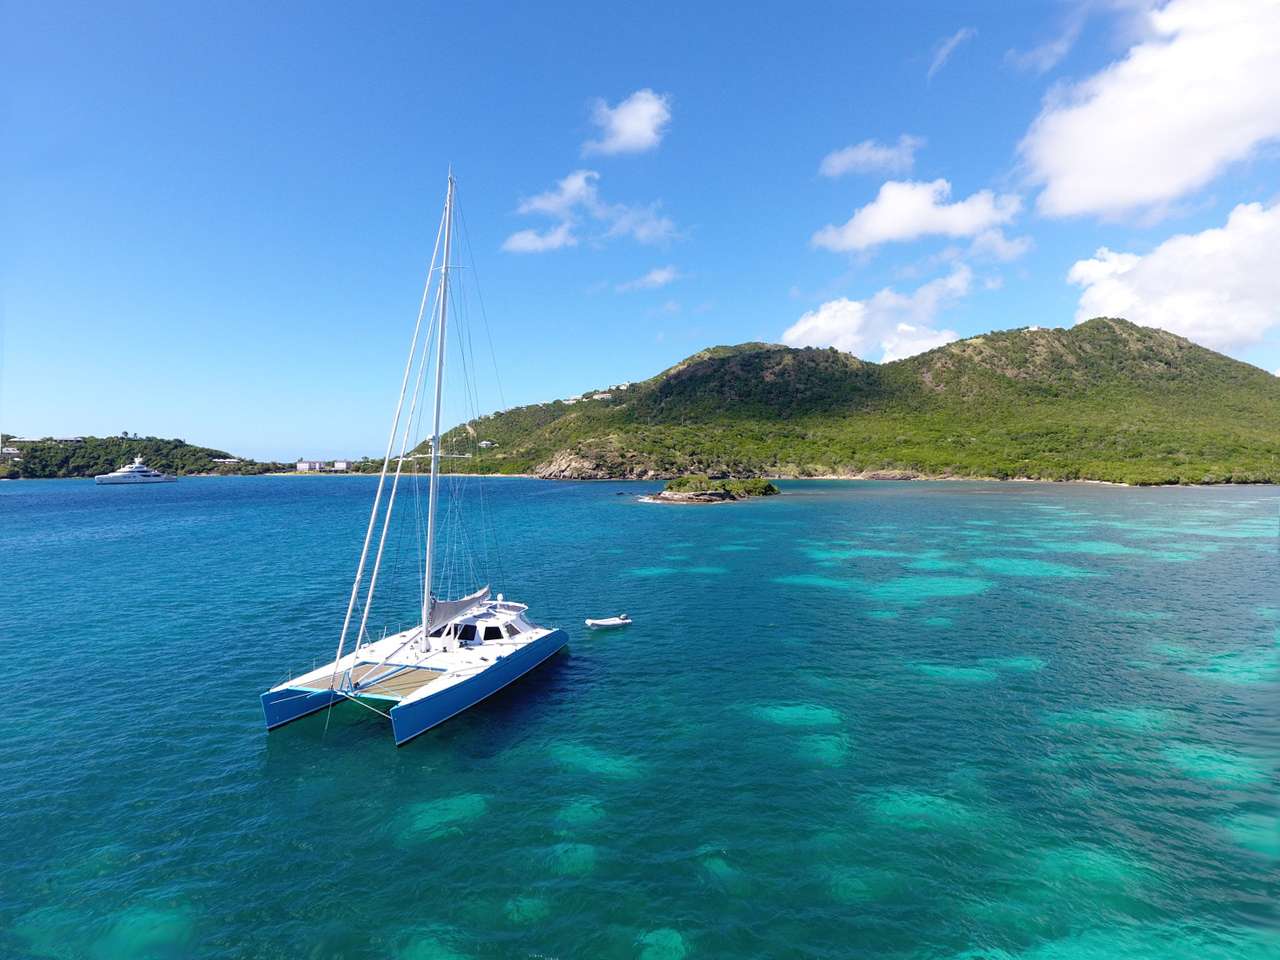 skylark - Yacht Charter Netherlands Antilles & Boat hire in Caribbean 1